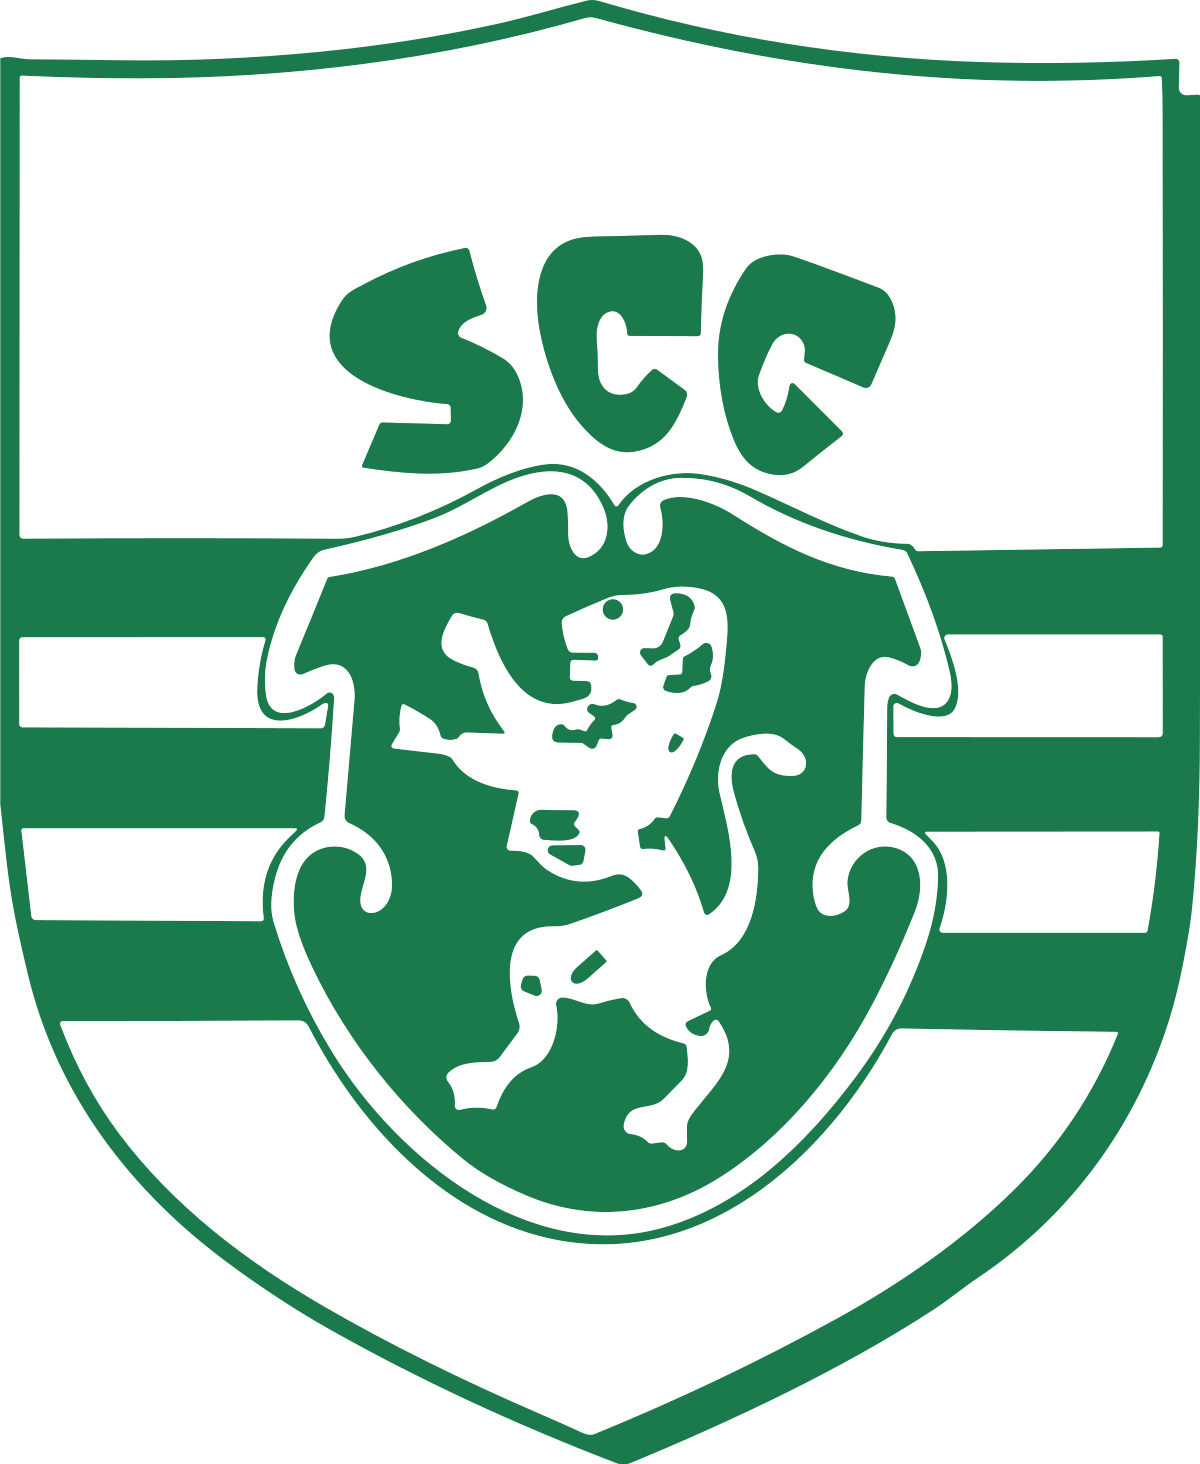 Sporting Goa logo